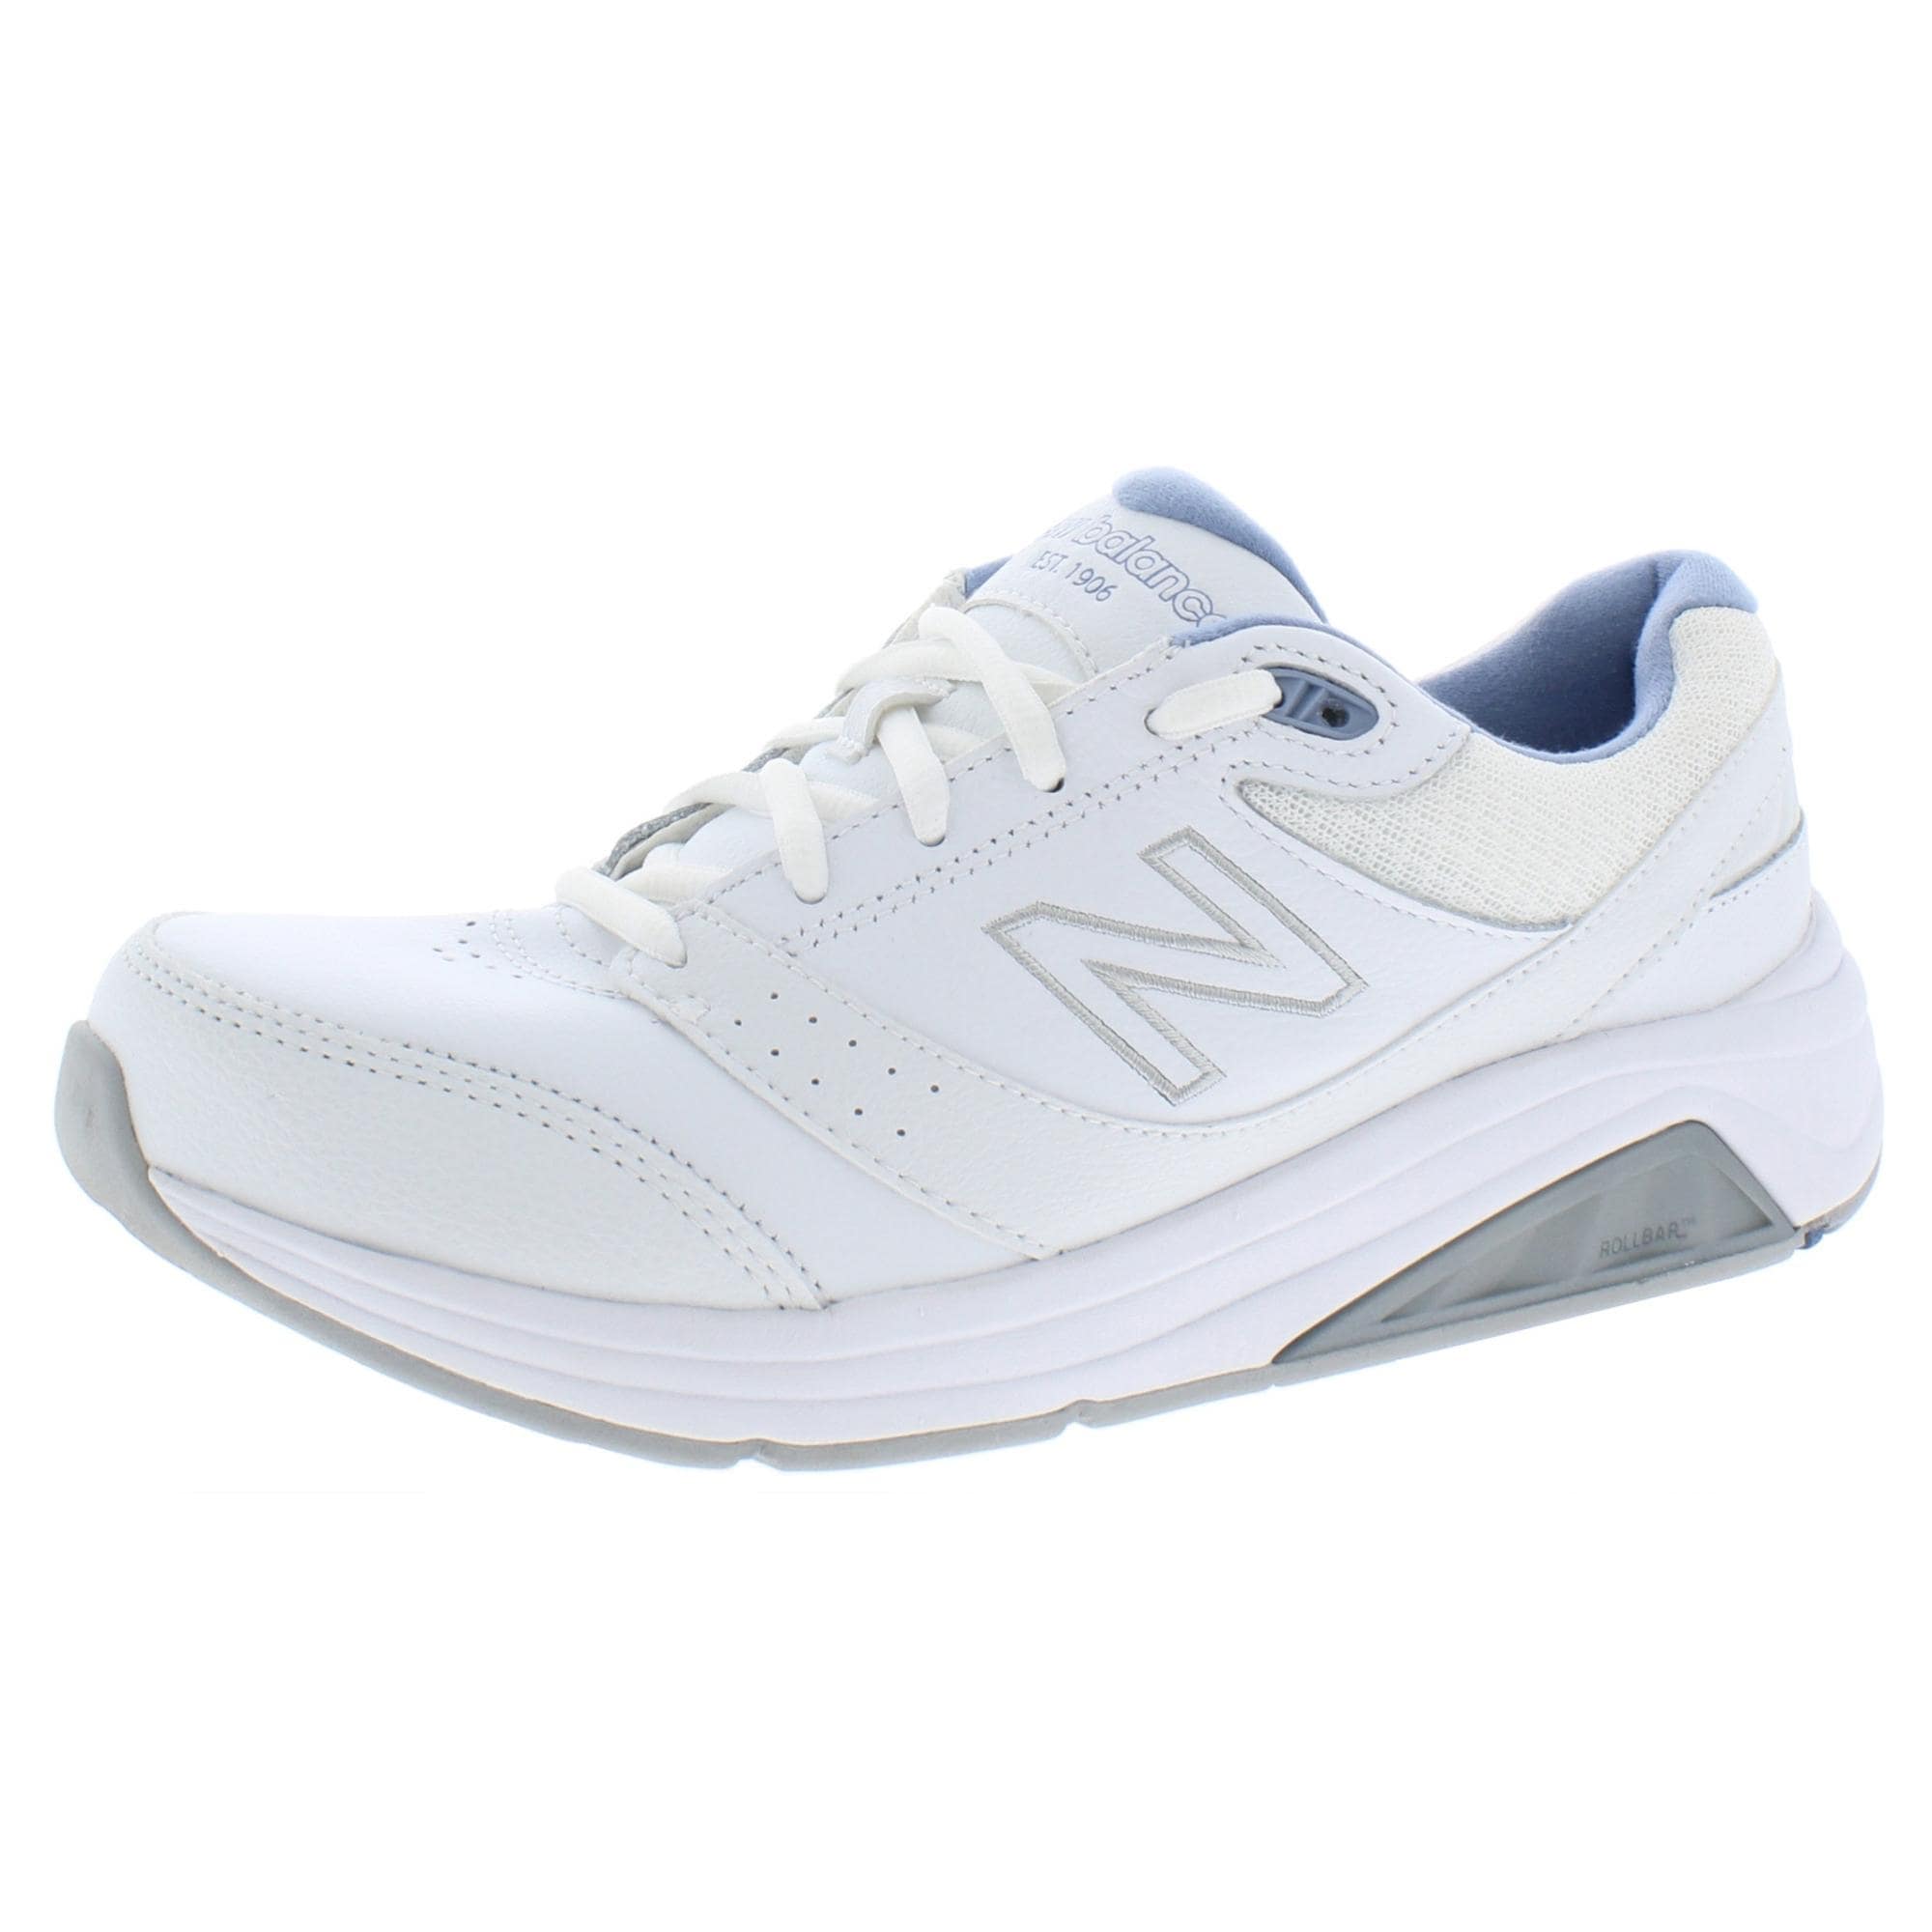 New Balance Womens 928v3 Walking Shoes 